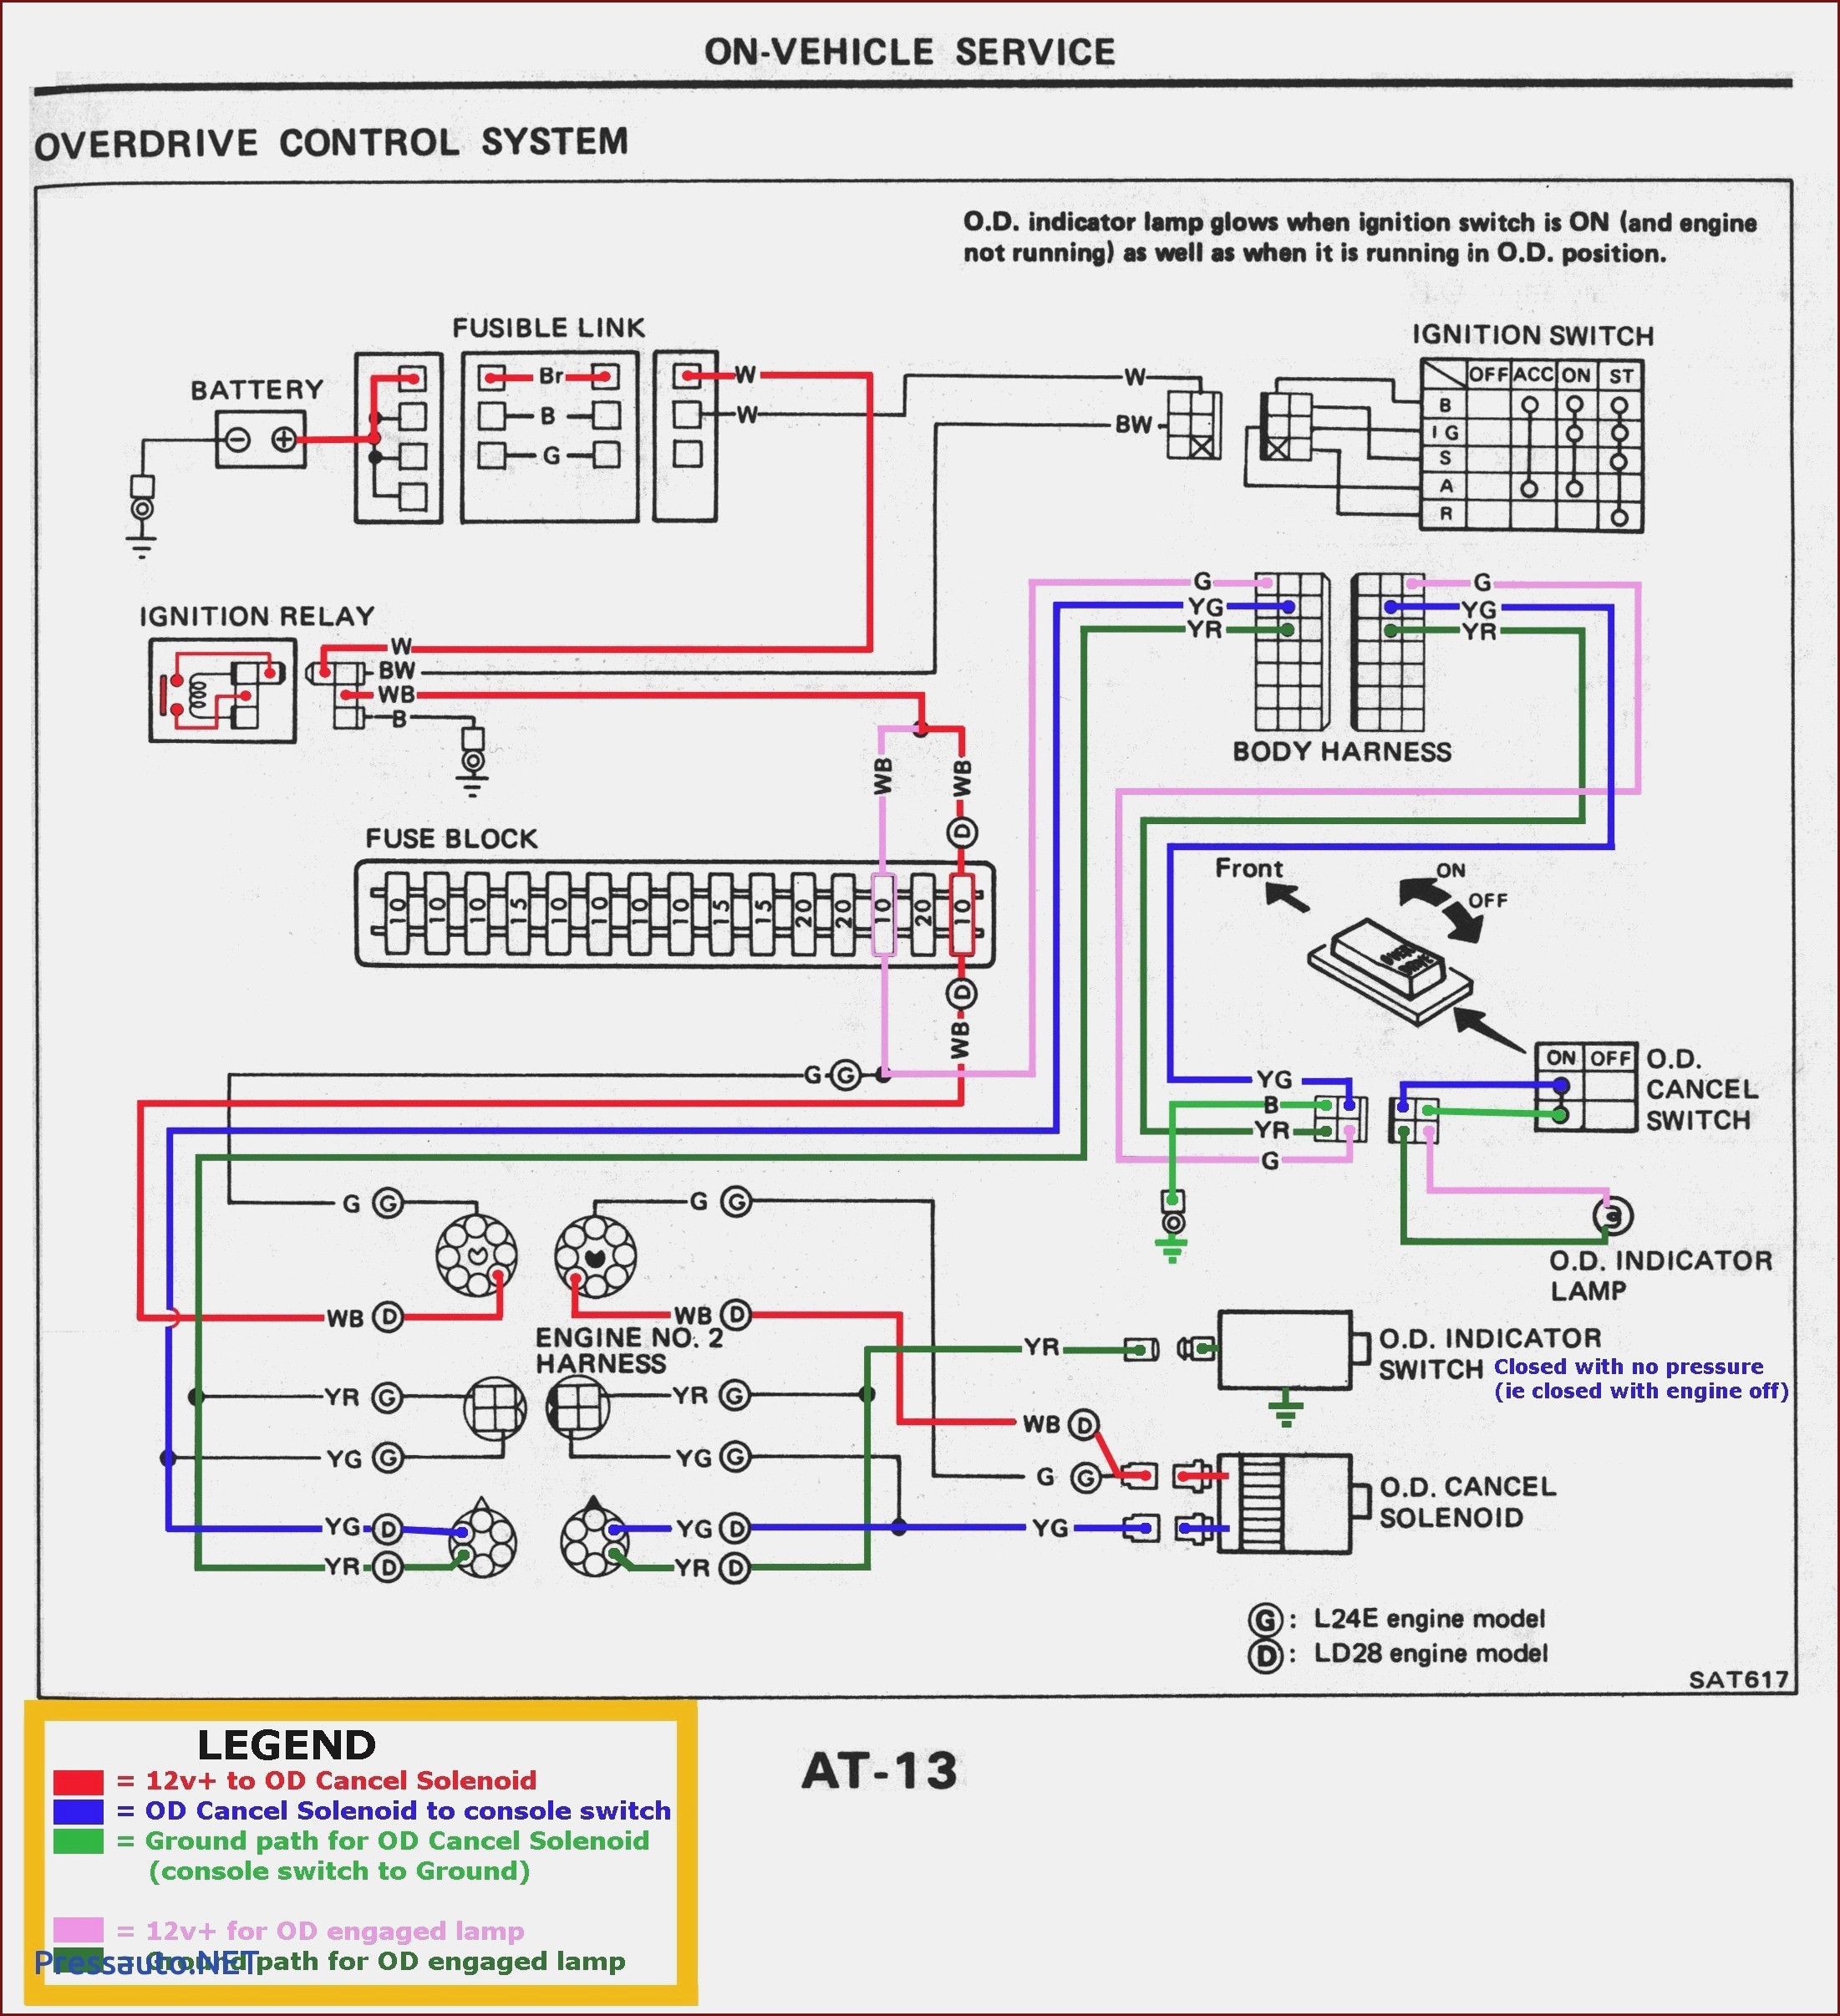 98 ford Ranger Engine Diagram 1957 Chevrolet Wiring Diagram Rule Mate 750 Wiring Diagram Of 98 ford Ranger Engine Diagram